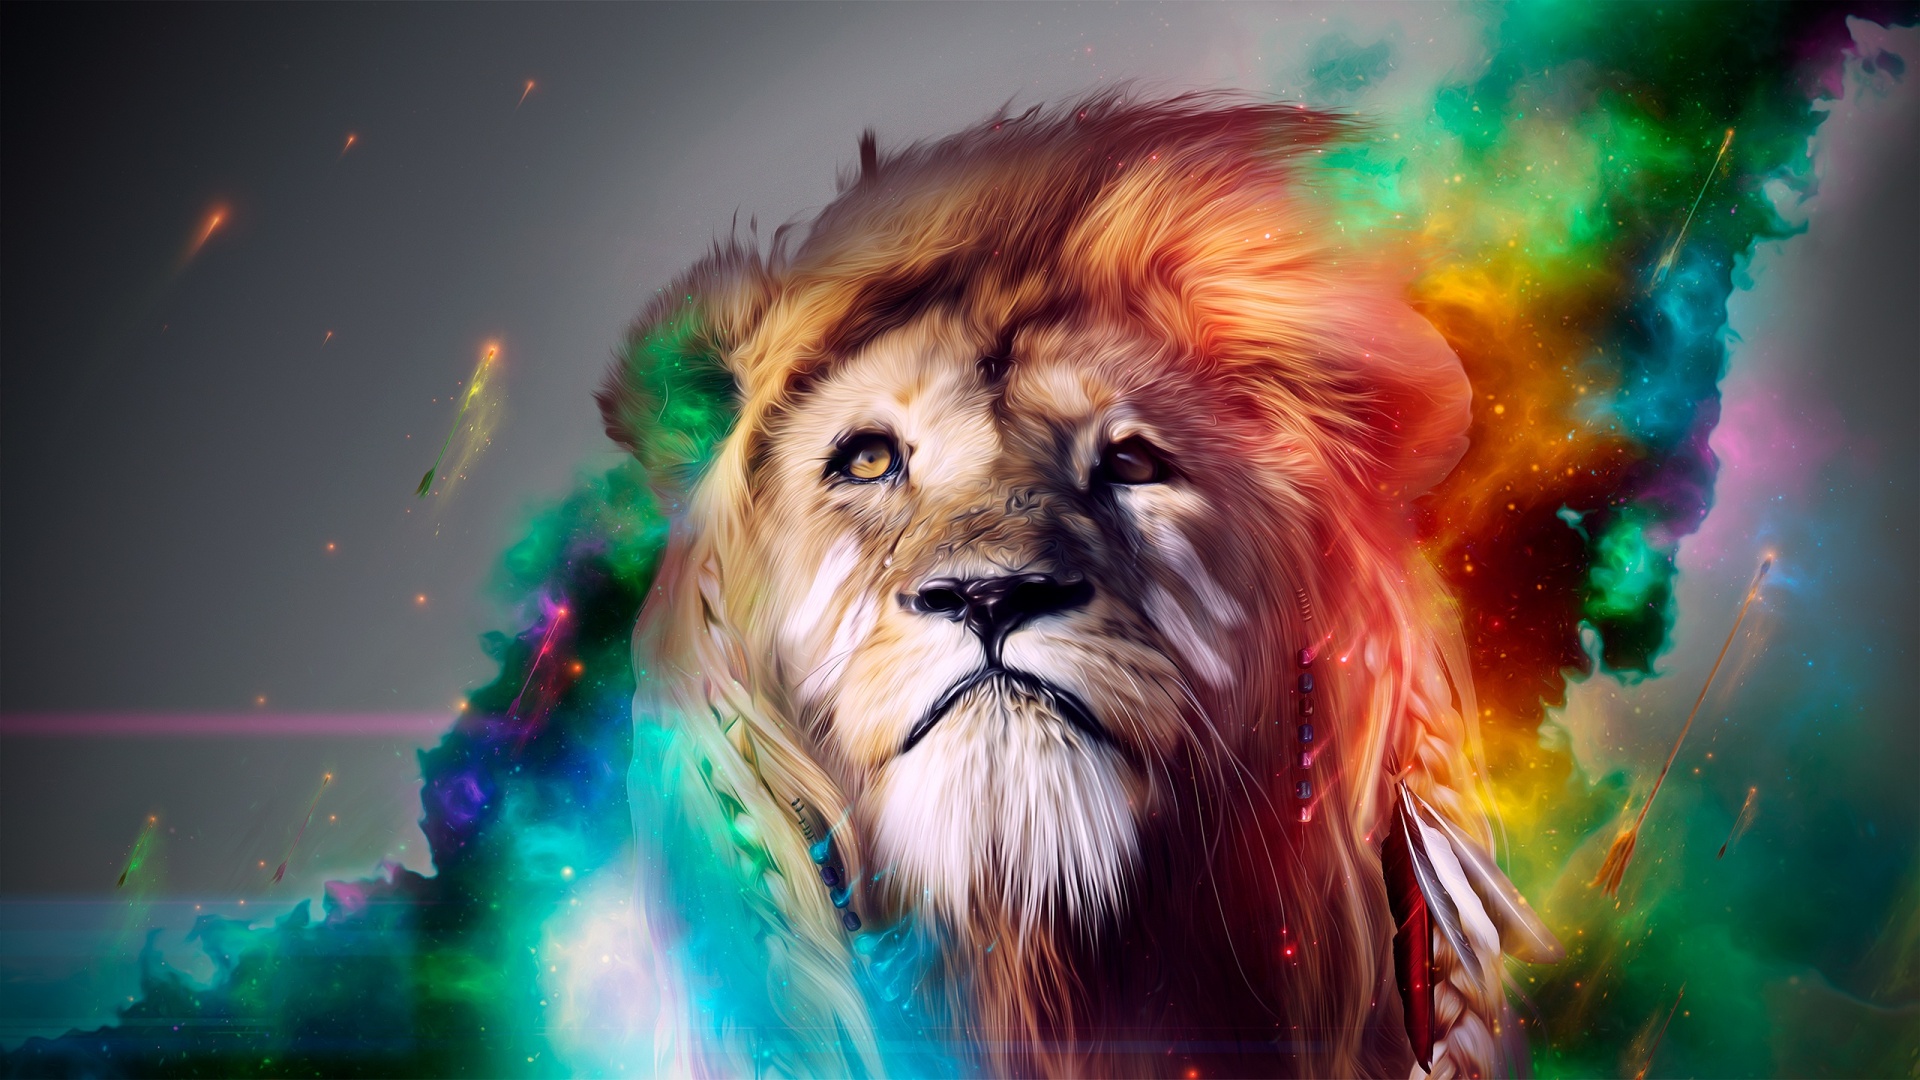 Awesome Lion HD Wallpaper 1080p